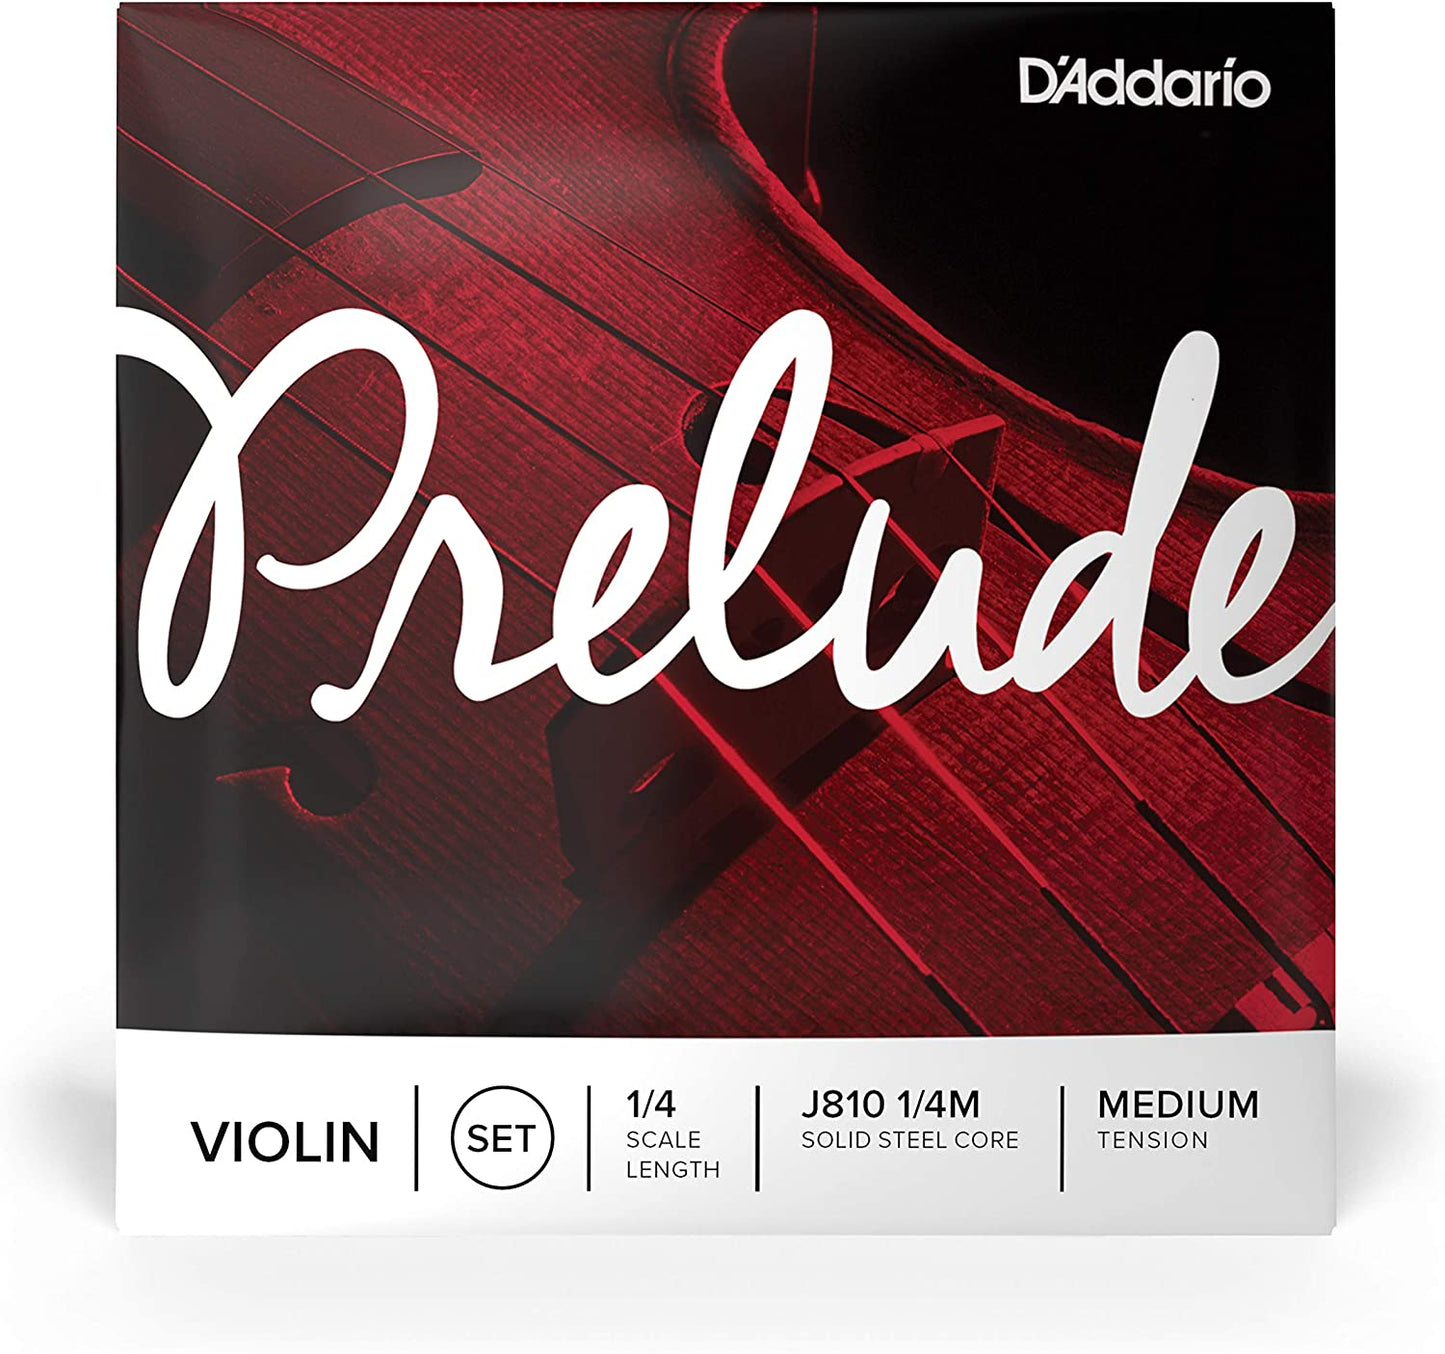 D'Addario J810 Prelude Violin 1/4"" Scale Medium Tension